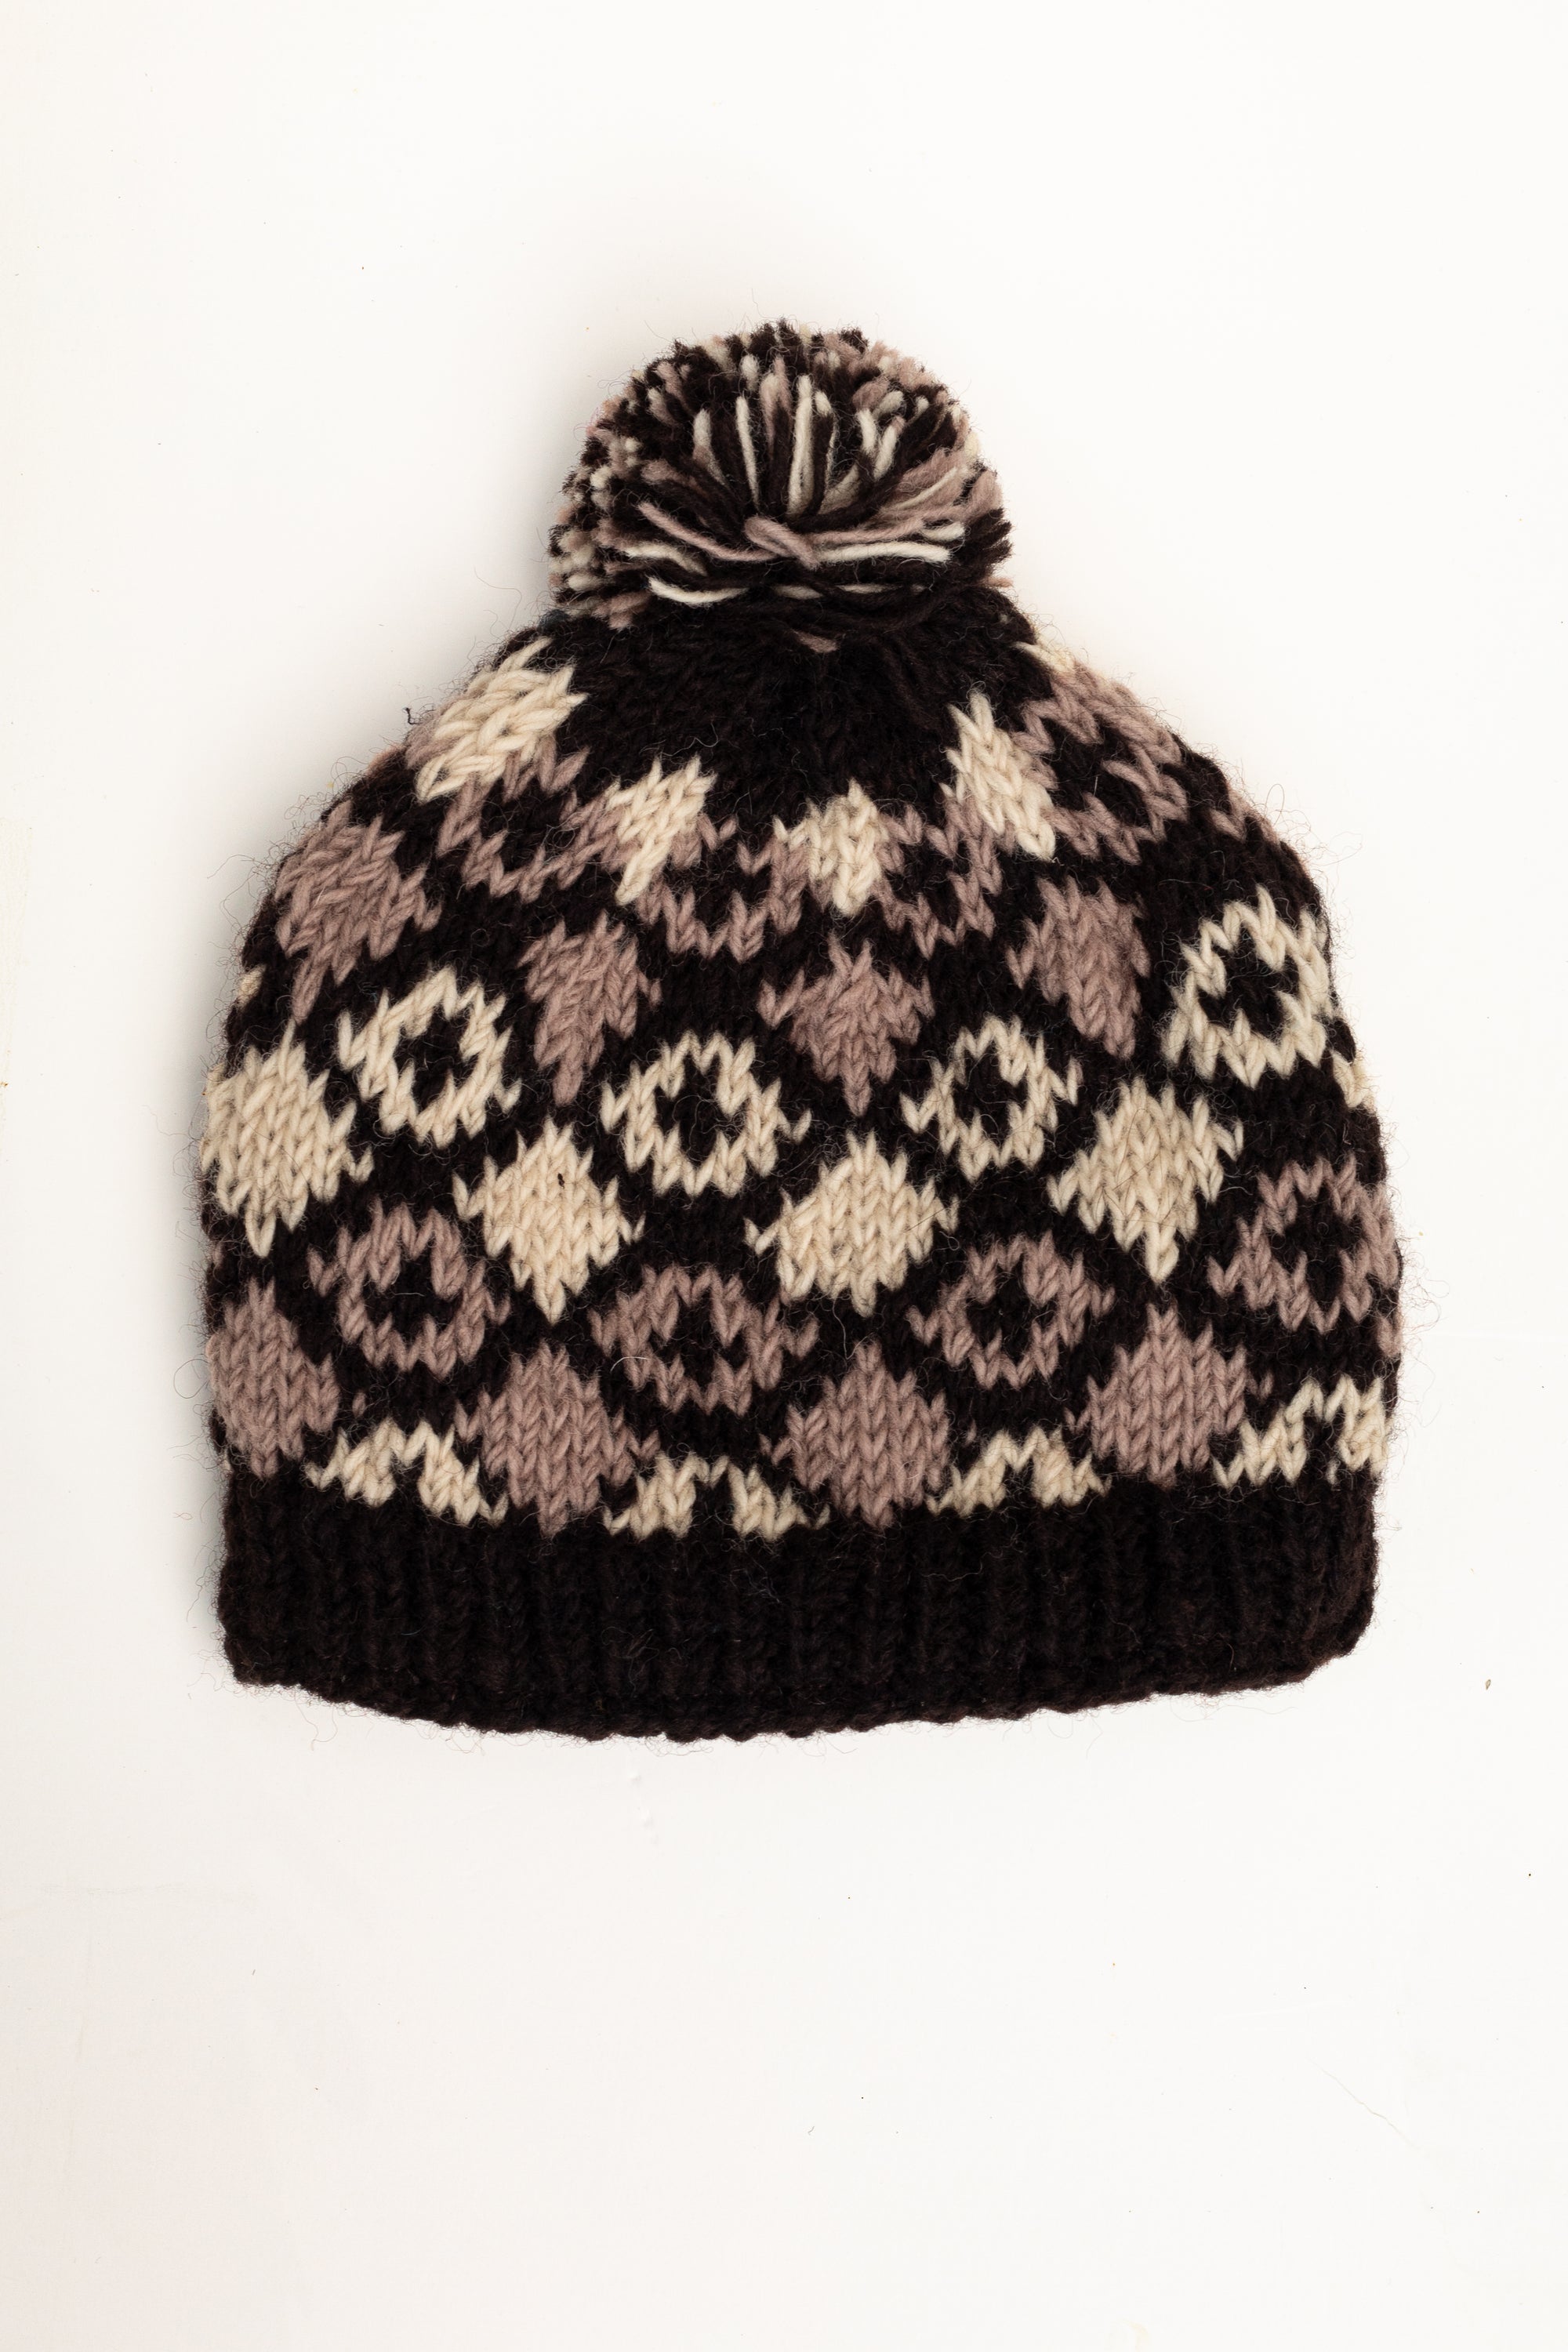 Wool & Fleece Hat with Pom - Diamond Design (Dark Brown & Cream) - Made in Nepal